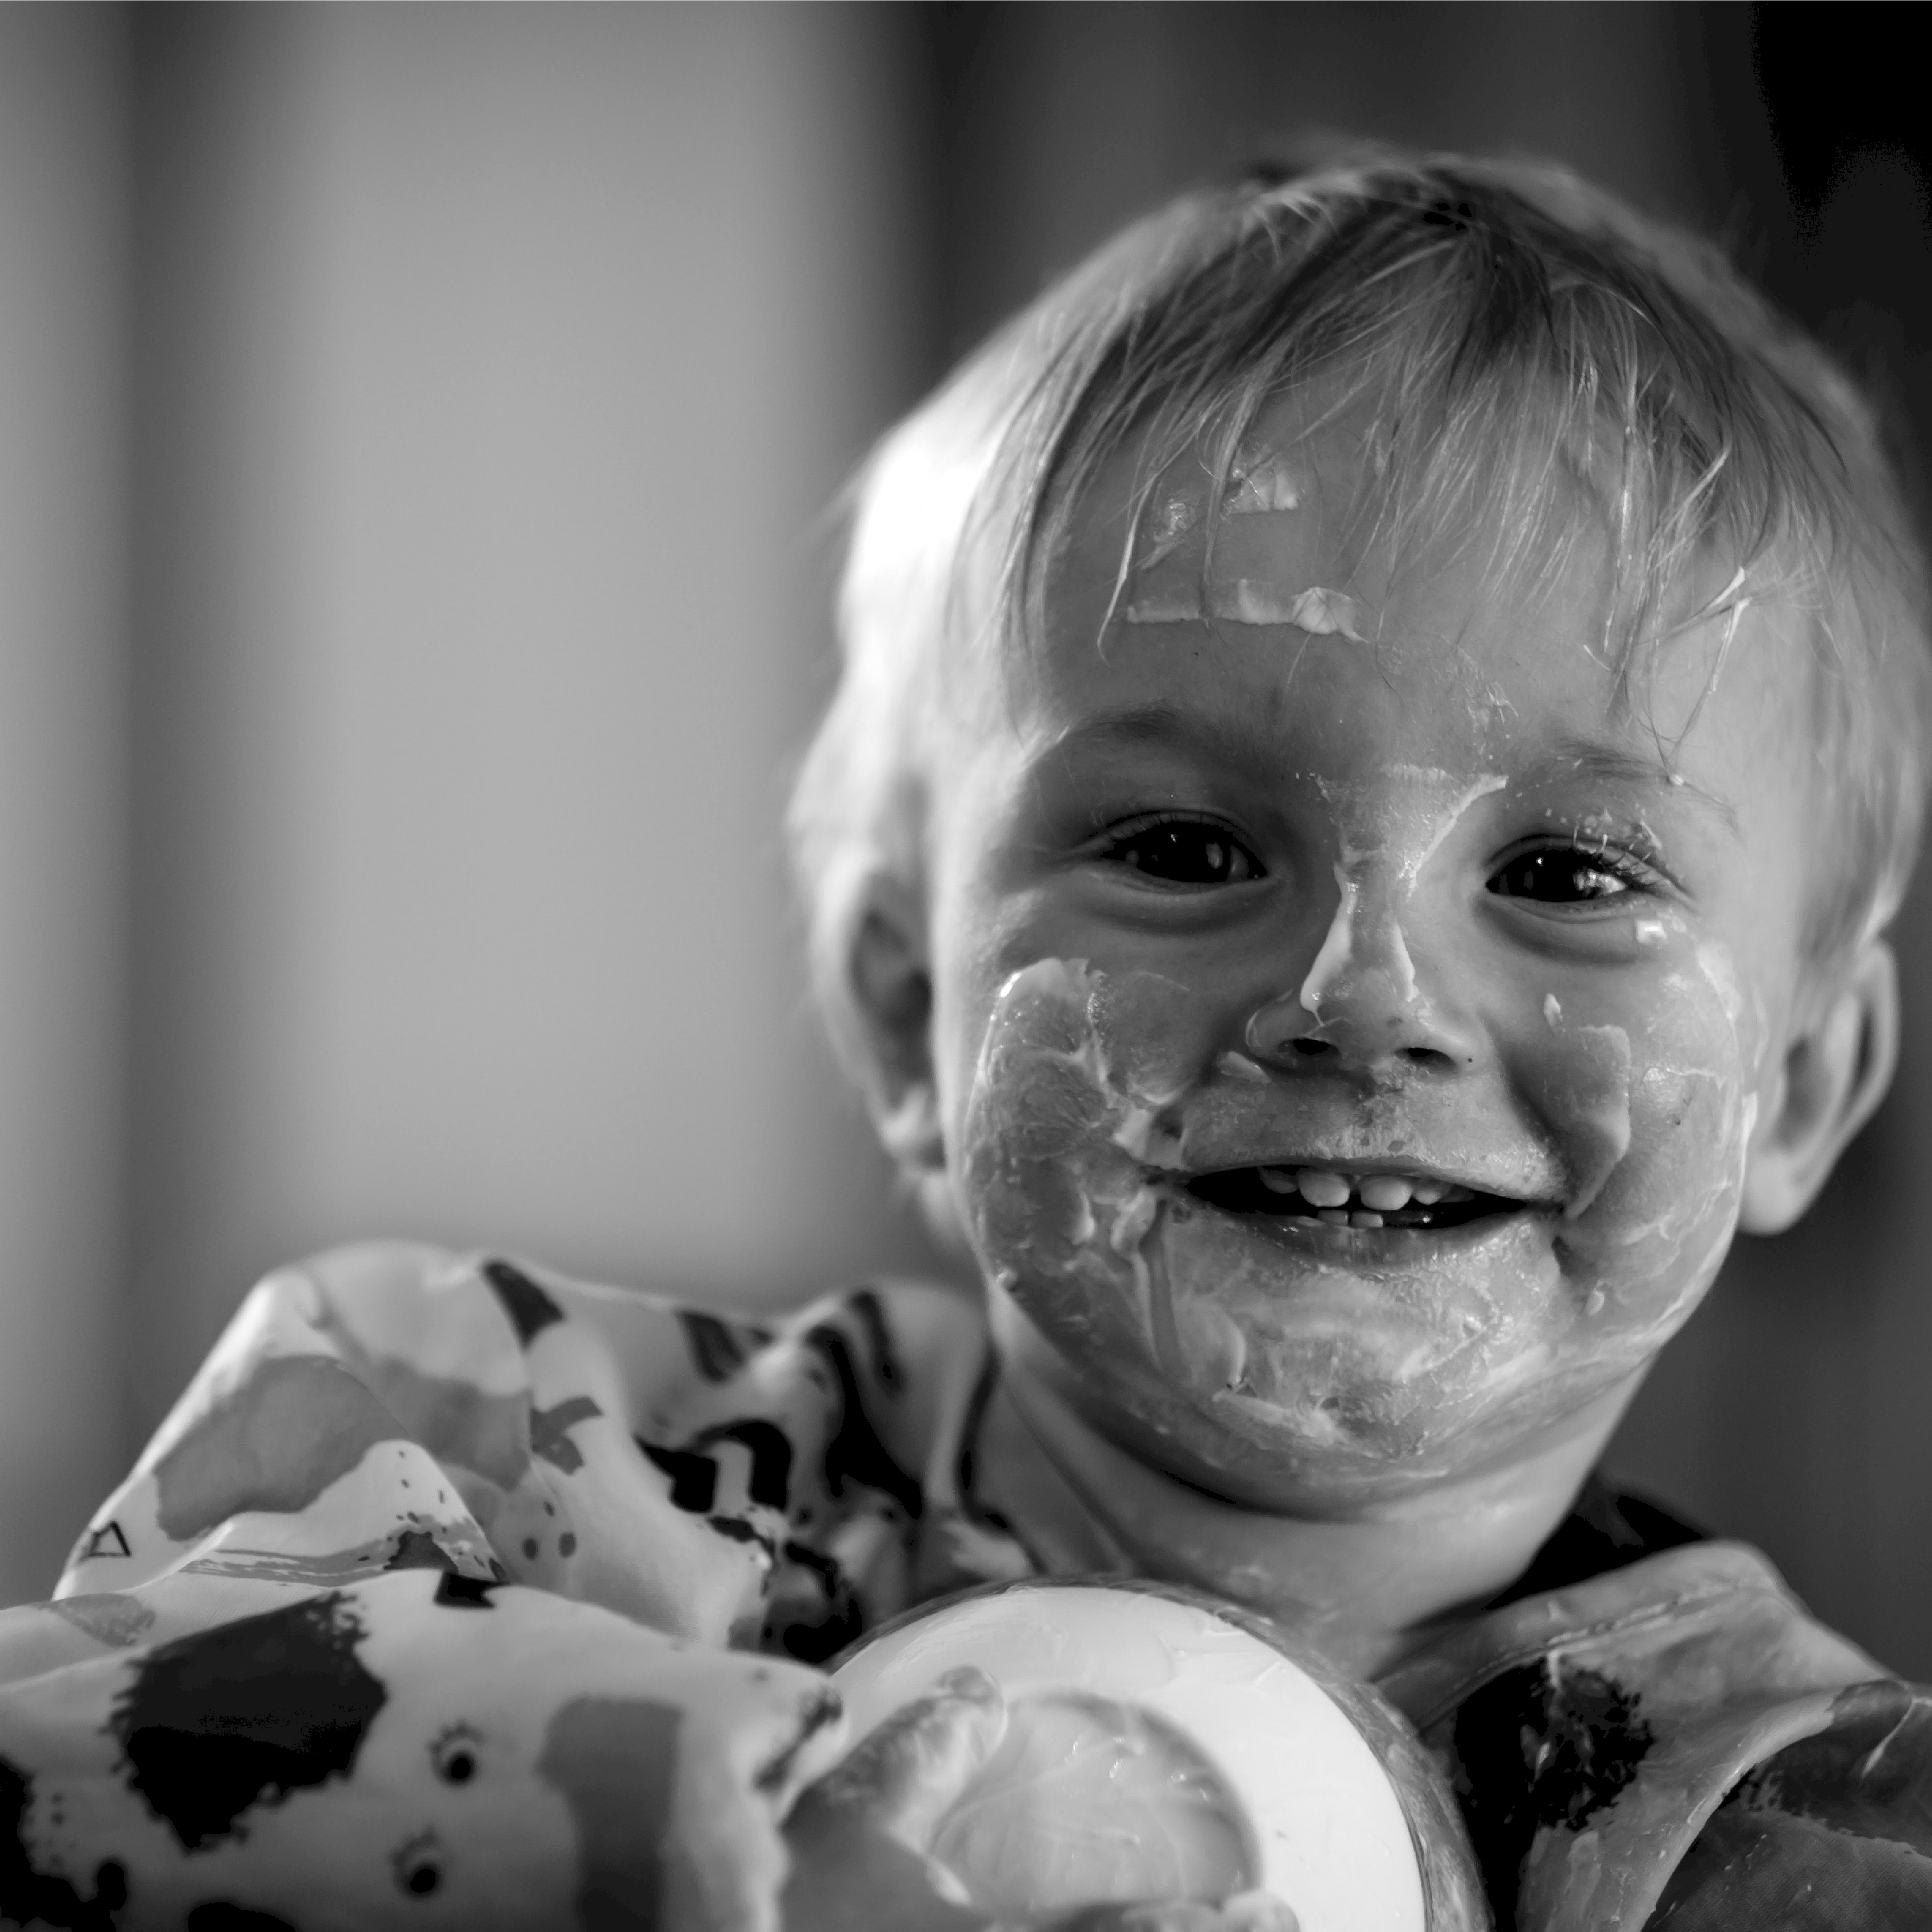 boy covered in yogurt